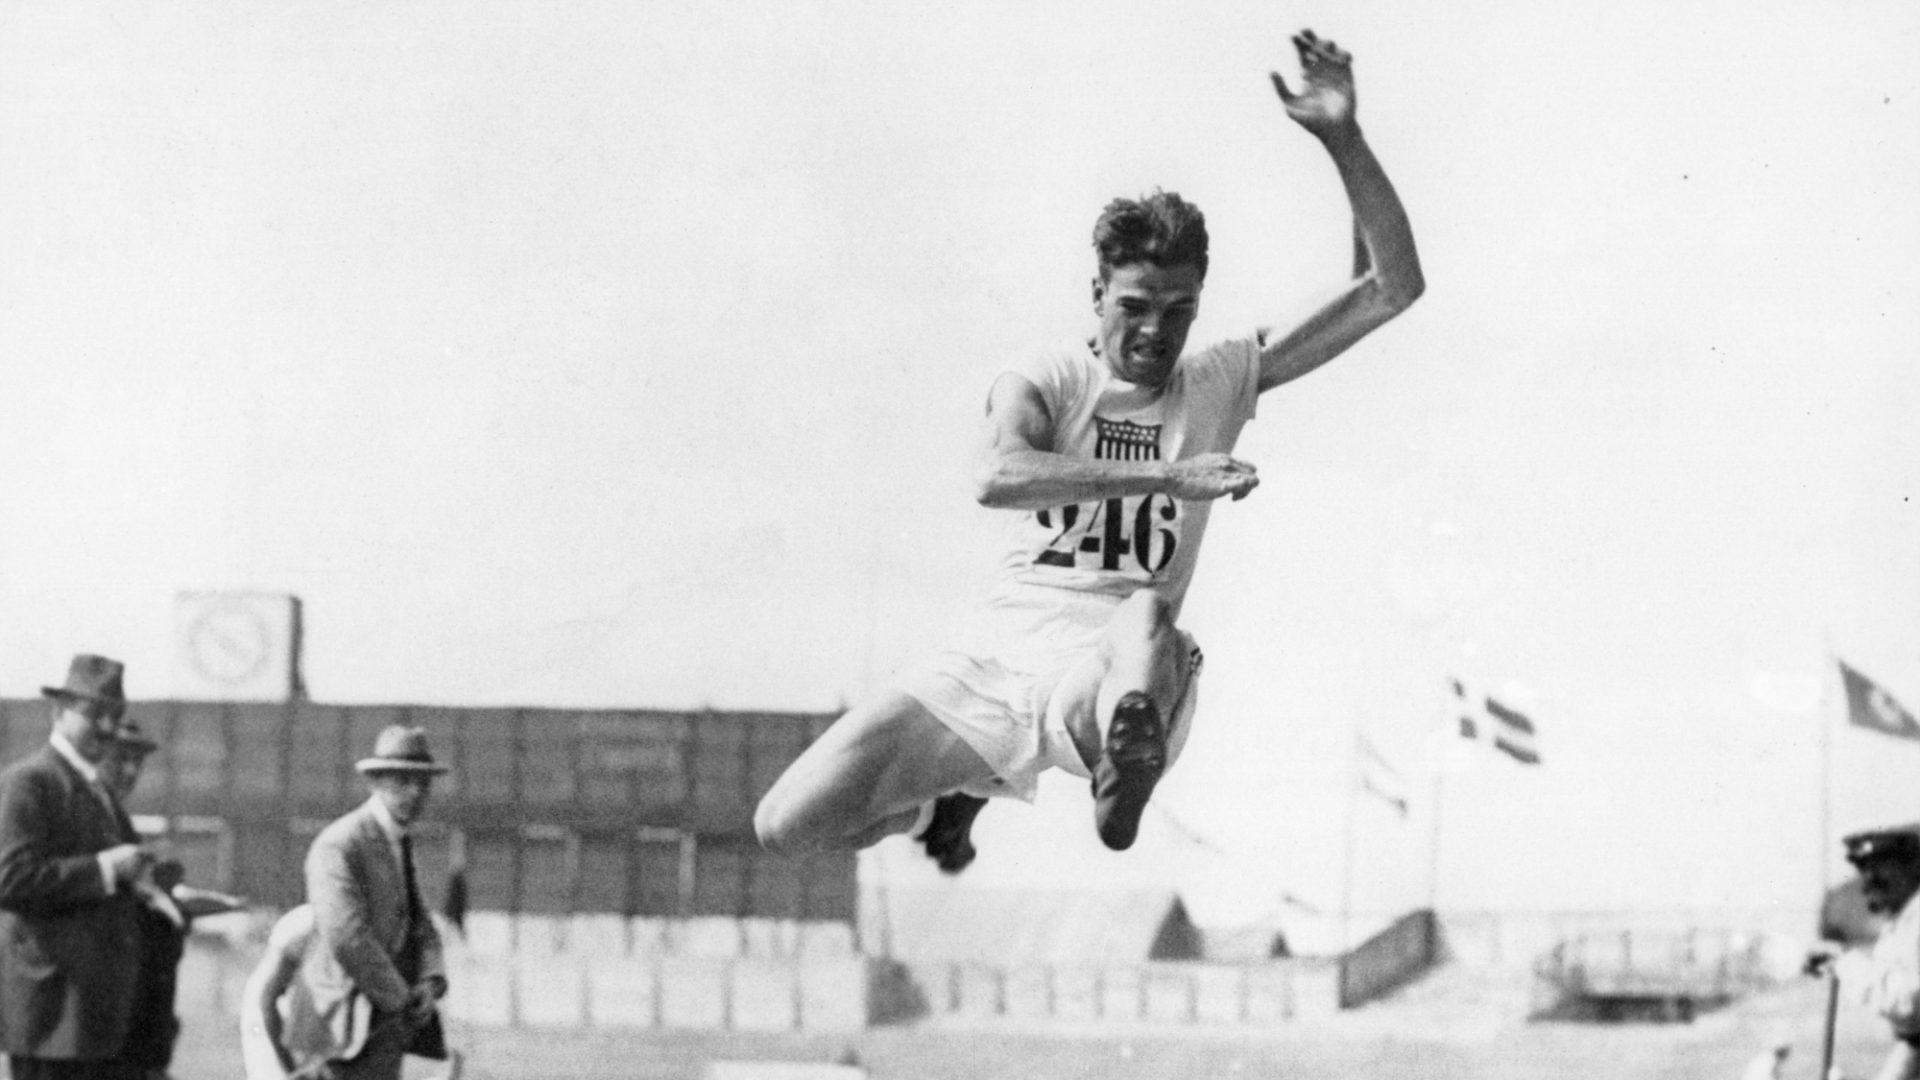 American pentathlete Robert LeGendre makes a world record long jump of 7.76 metres at the 1924 Paris Olympics. Photo: Bettmann Archive/Getty